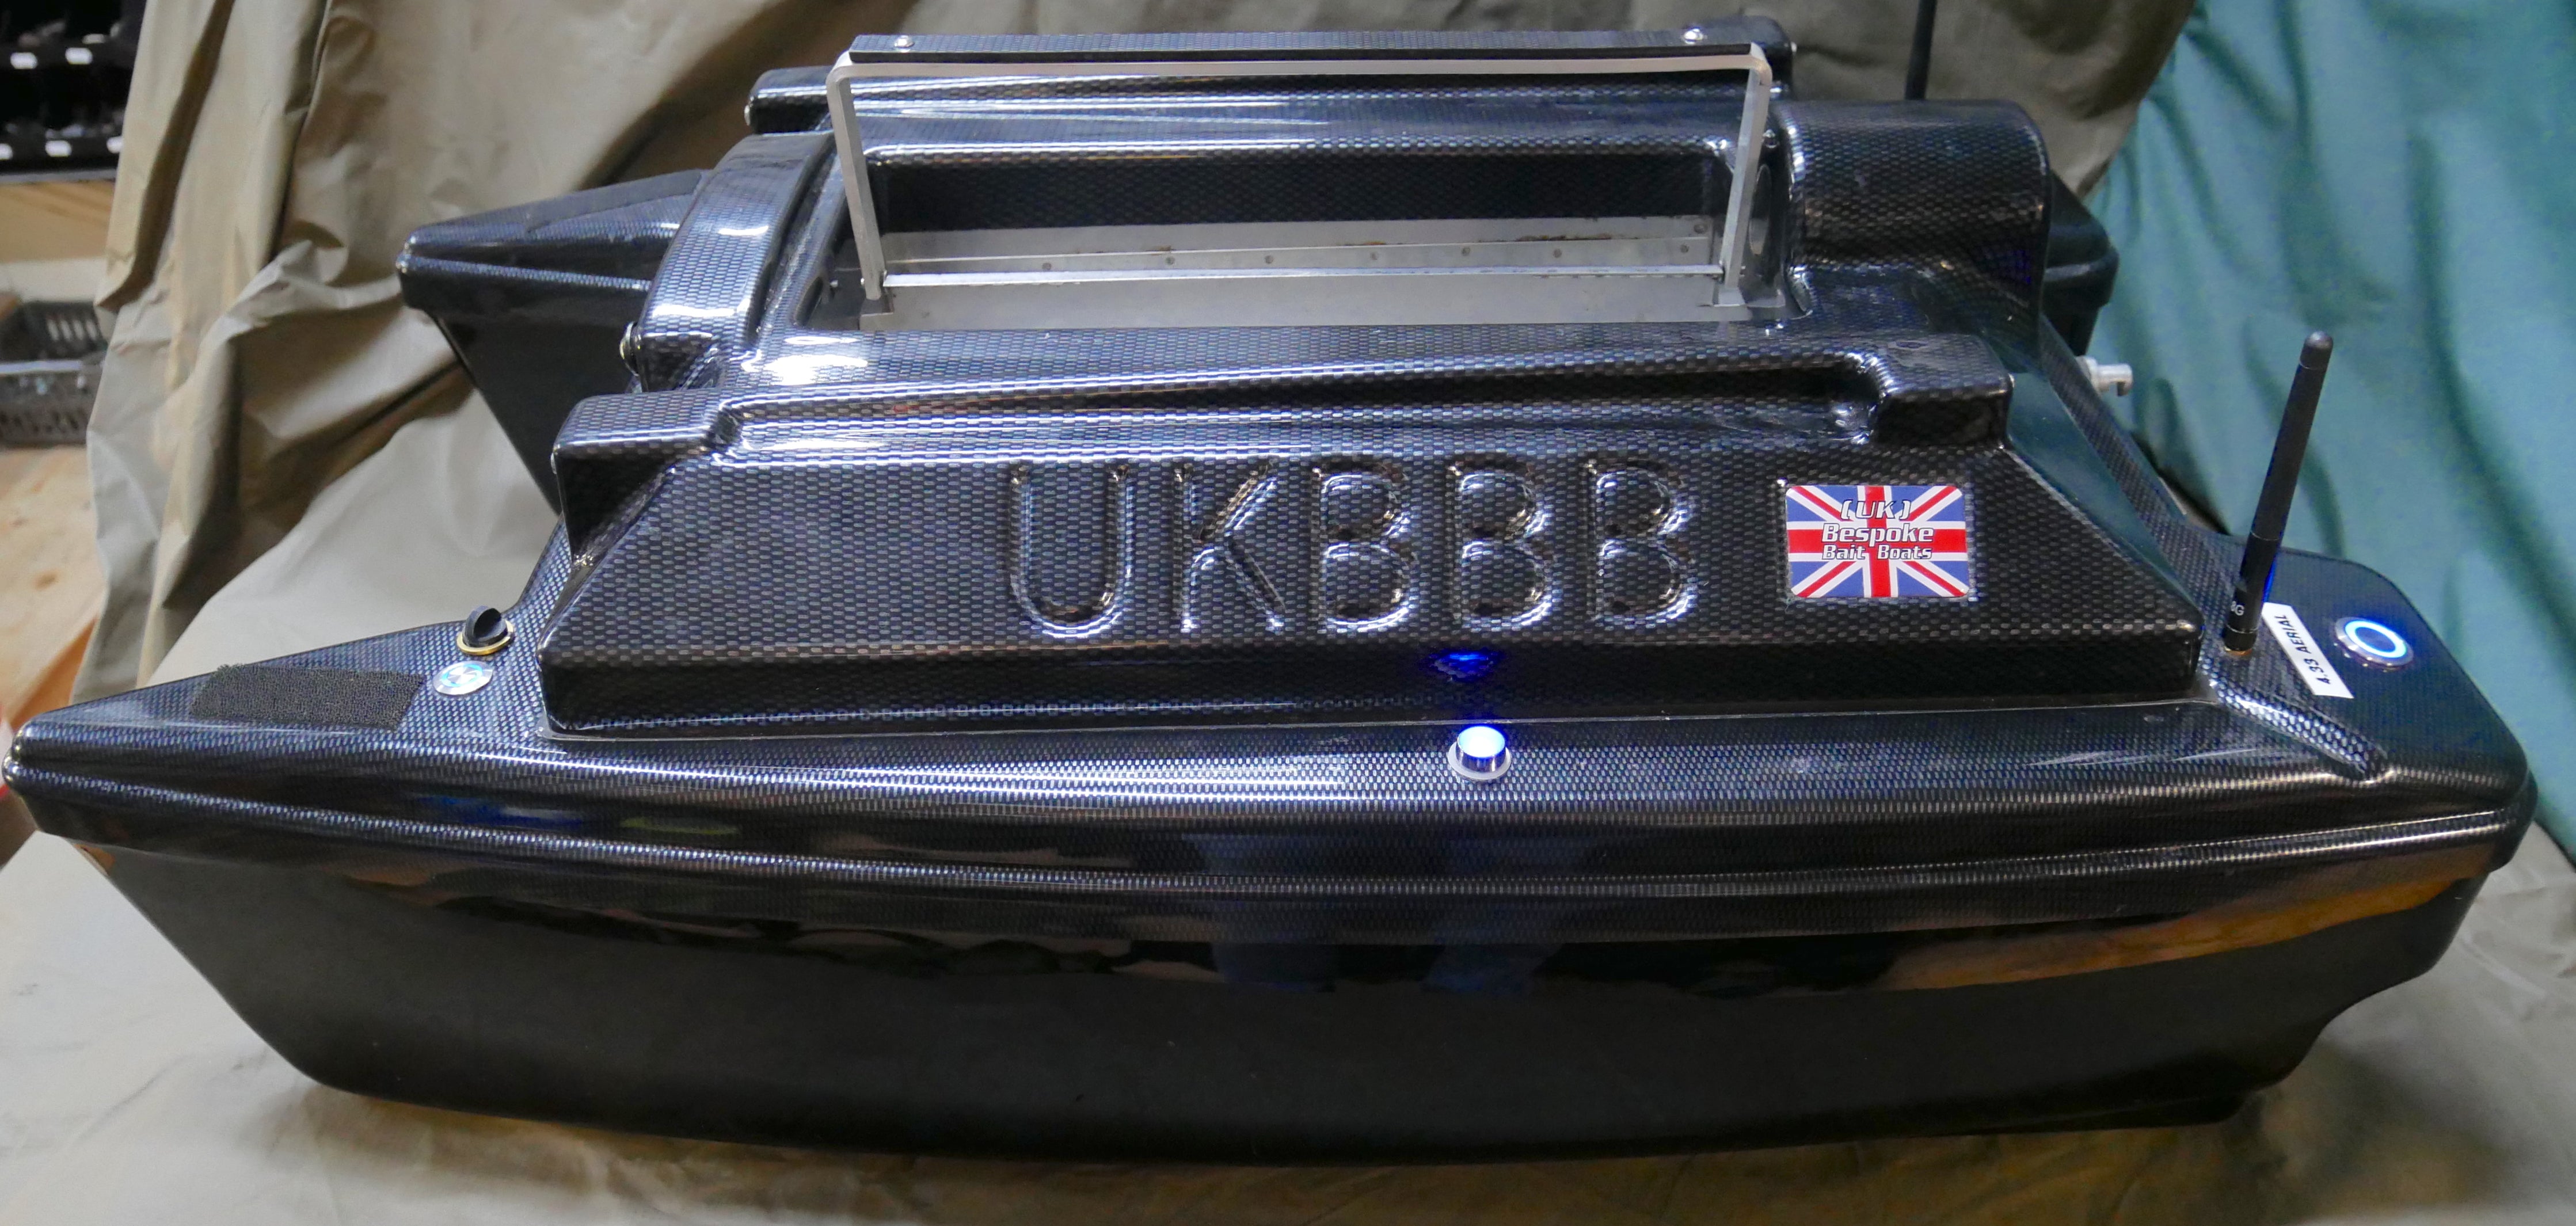 UKBBB UK Bespoke Bait Boats The Enticer Bait Boat